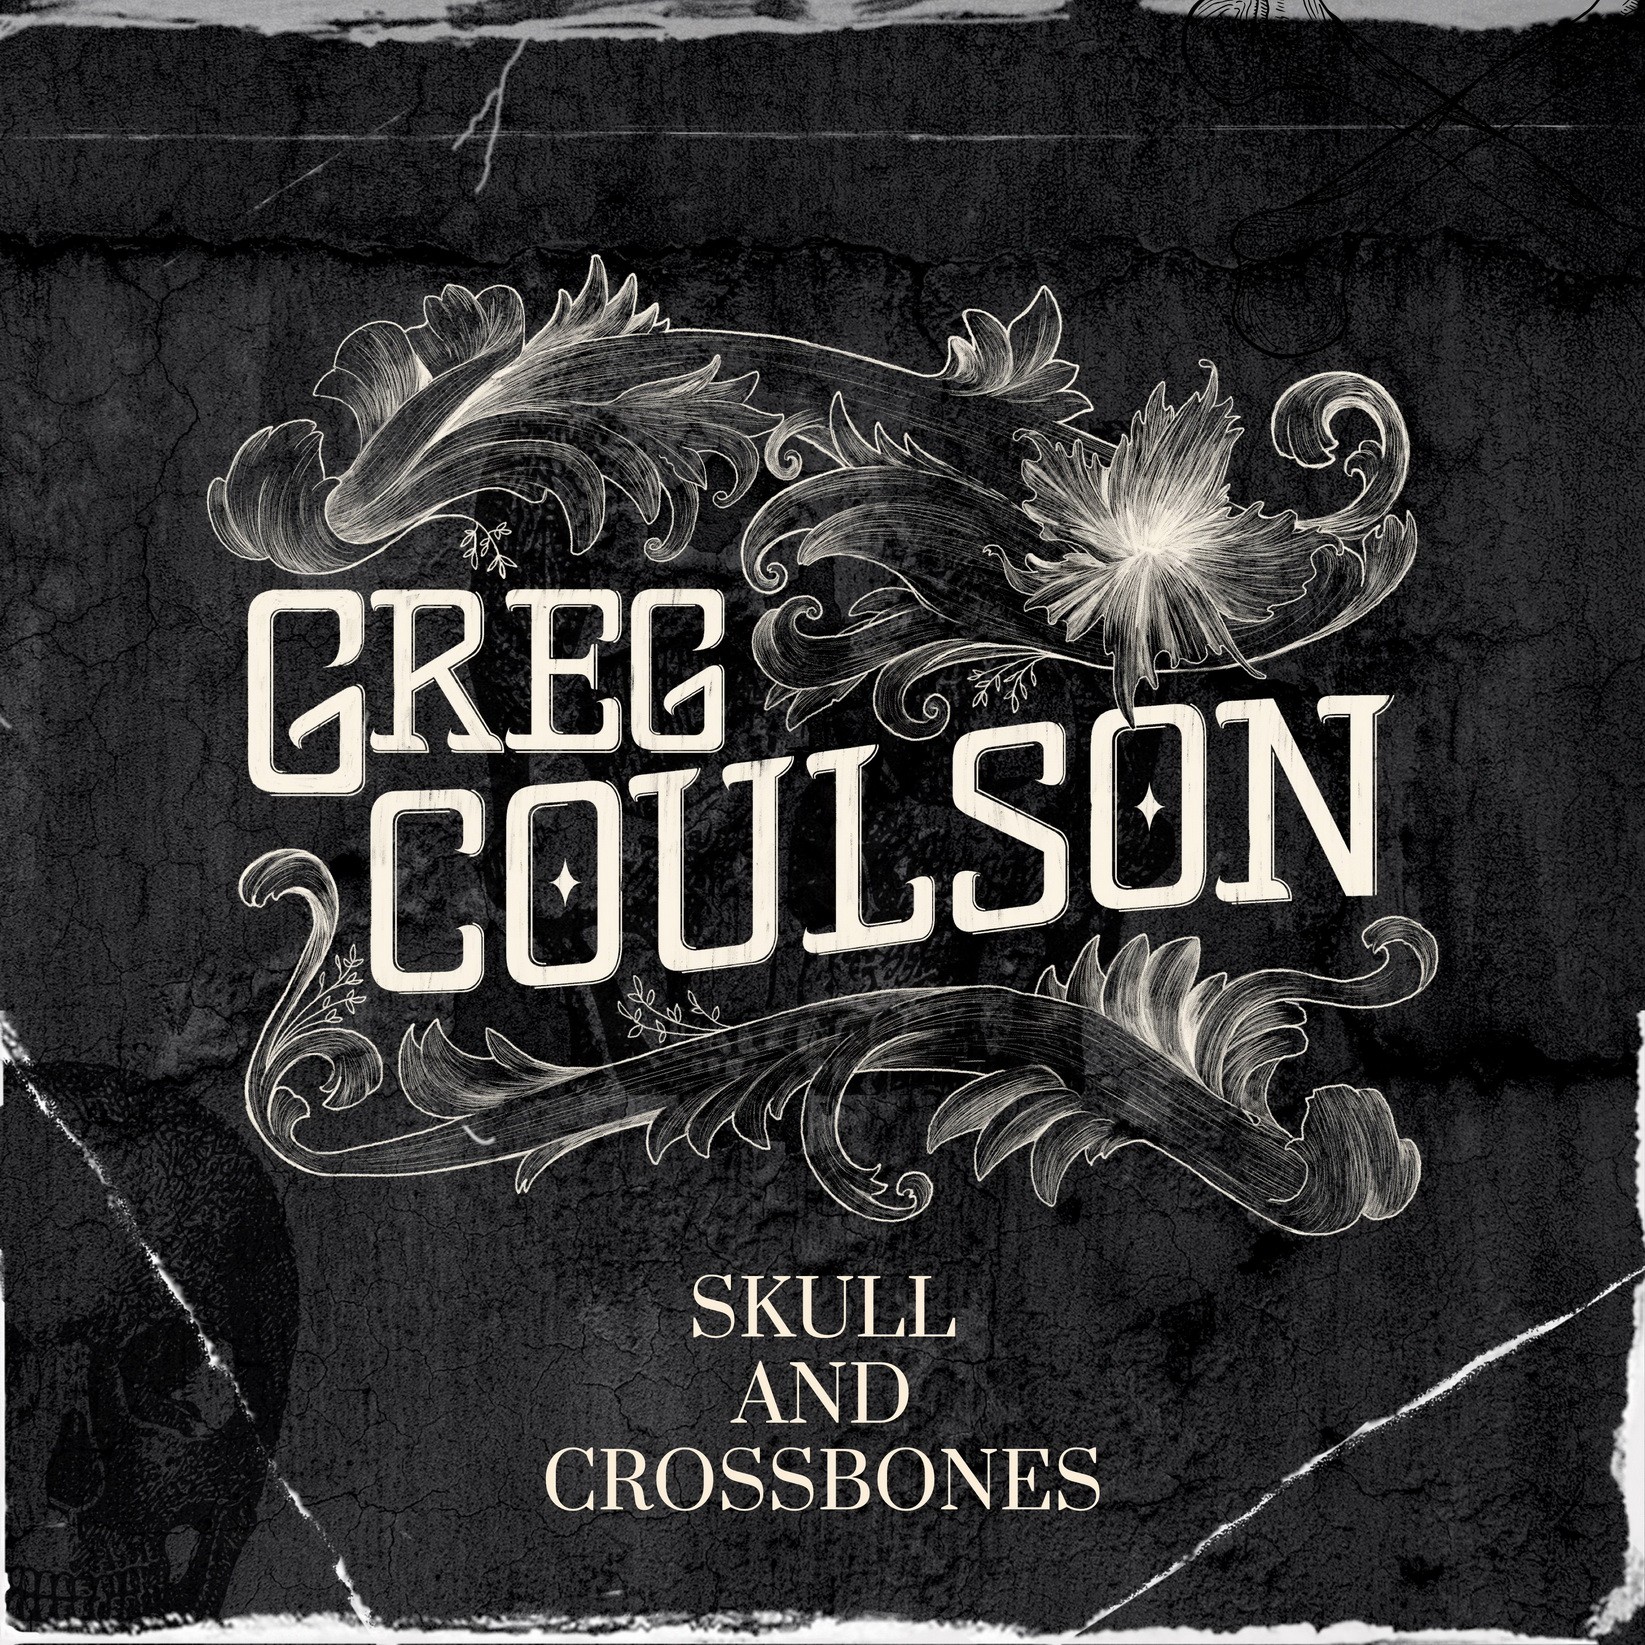 Greg Coulson - Skull And Crossbones